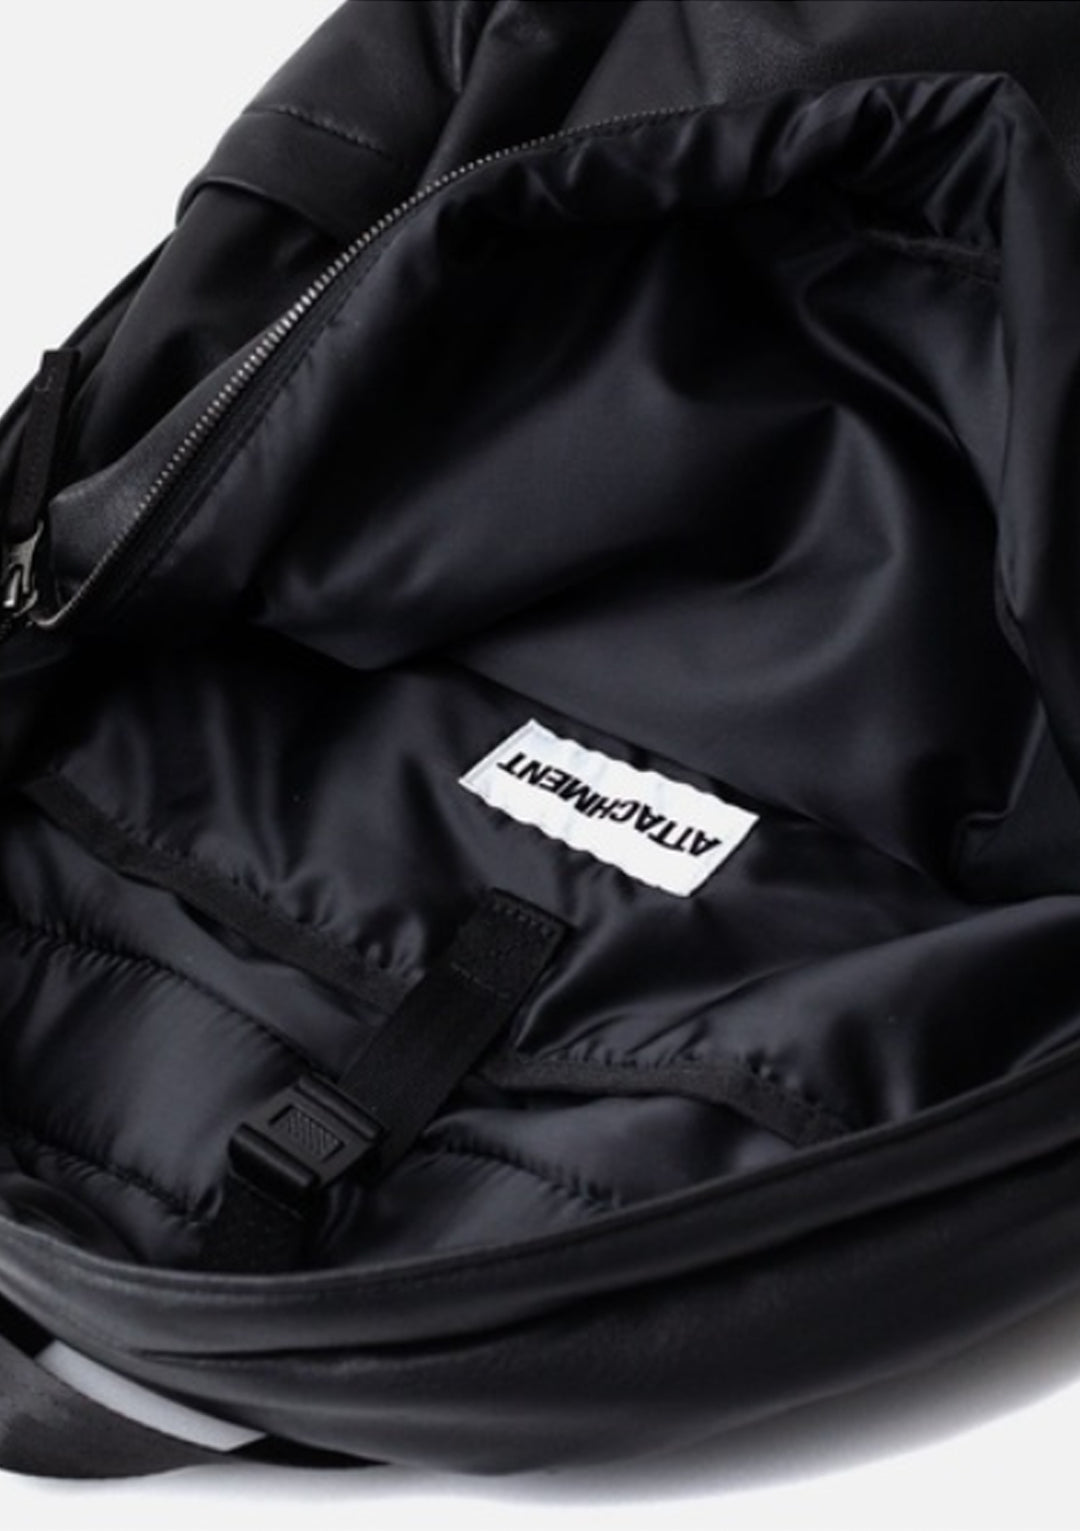 AA22-097 Synthetic leather backpack